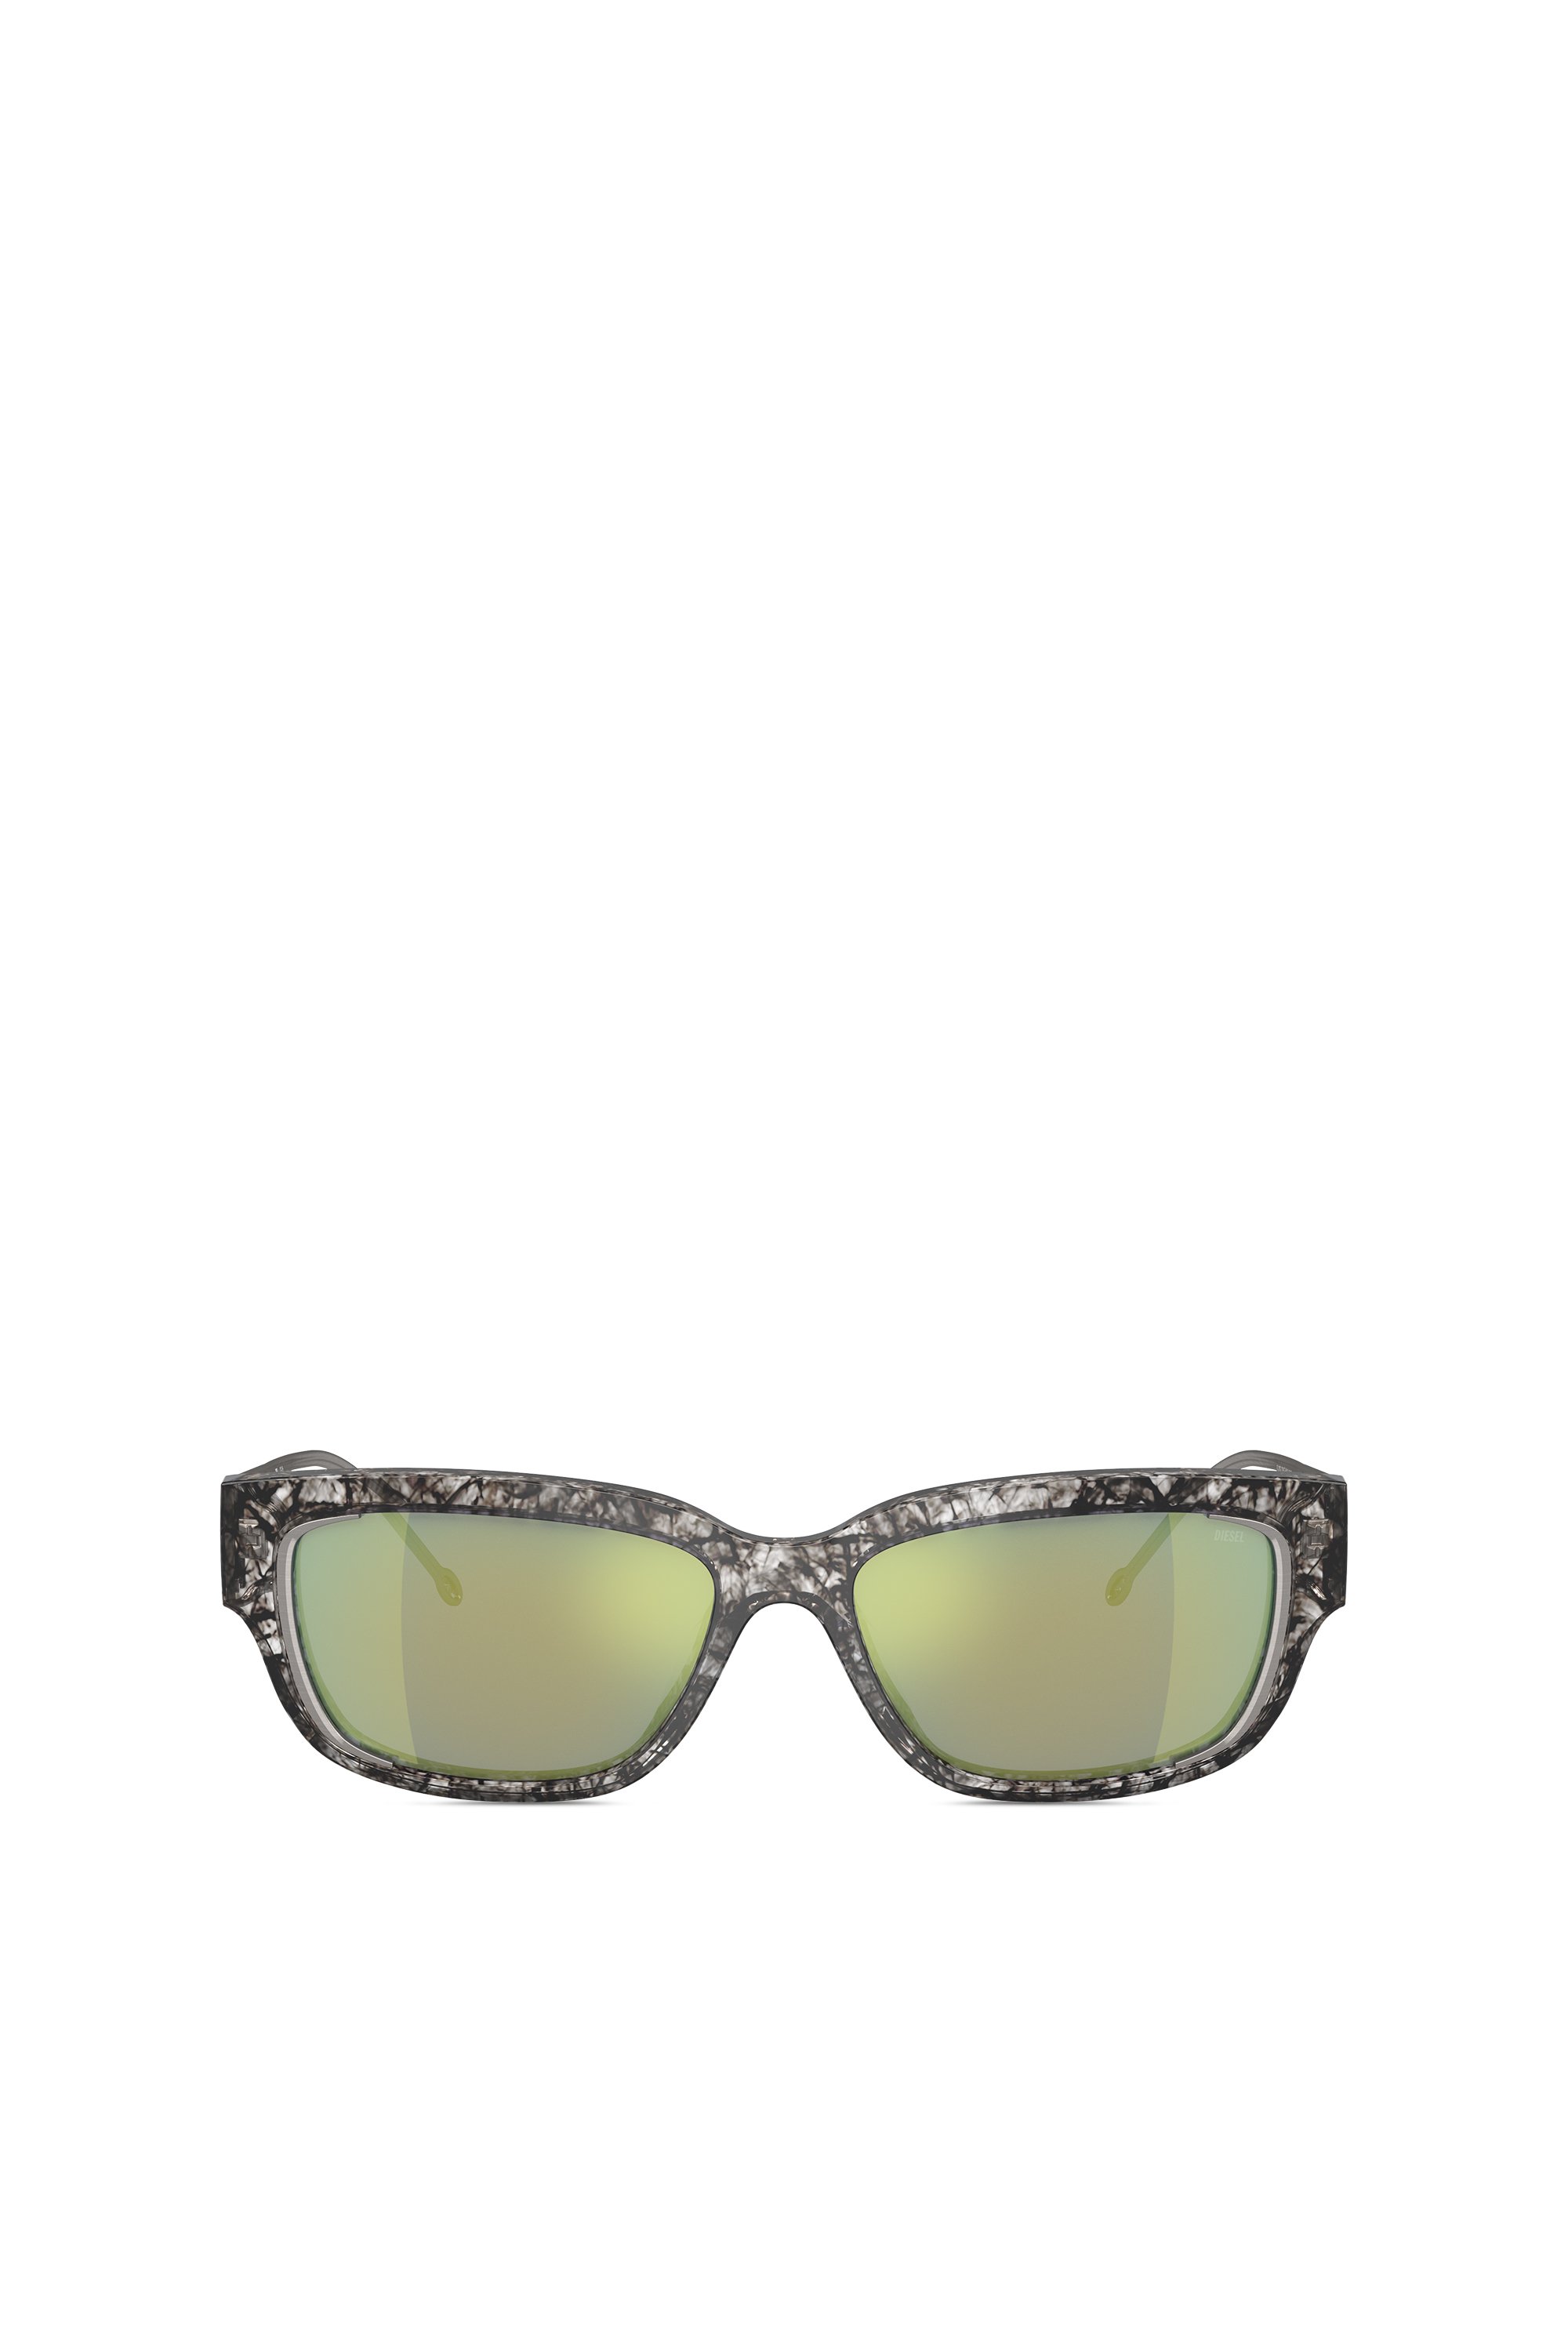 Diesel - Everyday style sunglasses - Sunglasses - Unisex - Brown